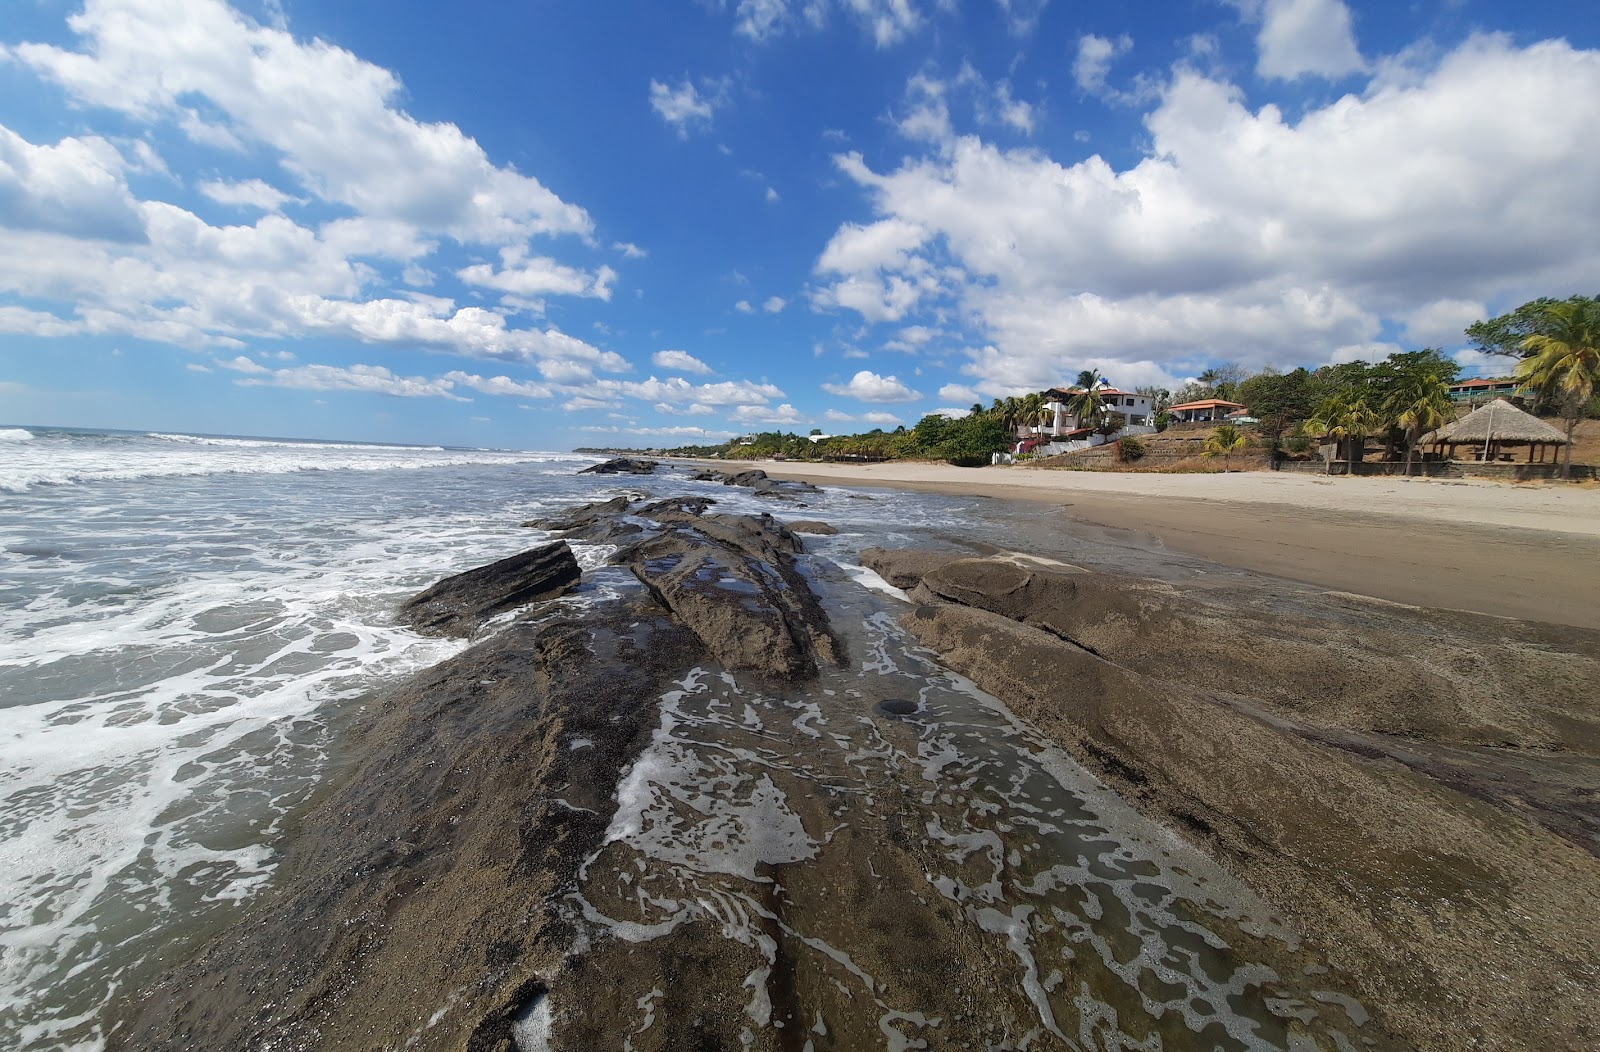 Playa Pochomil Viejo'in fotoğrafı hafif ince çakıl taş yüzey ile